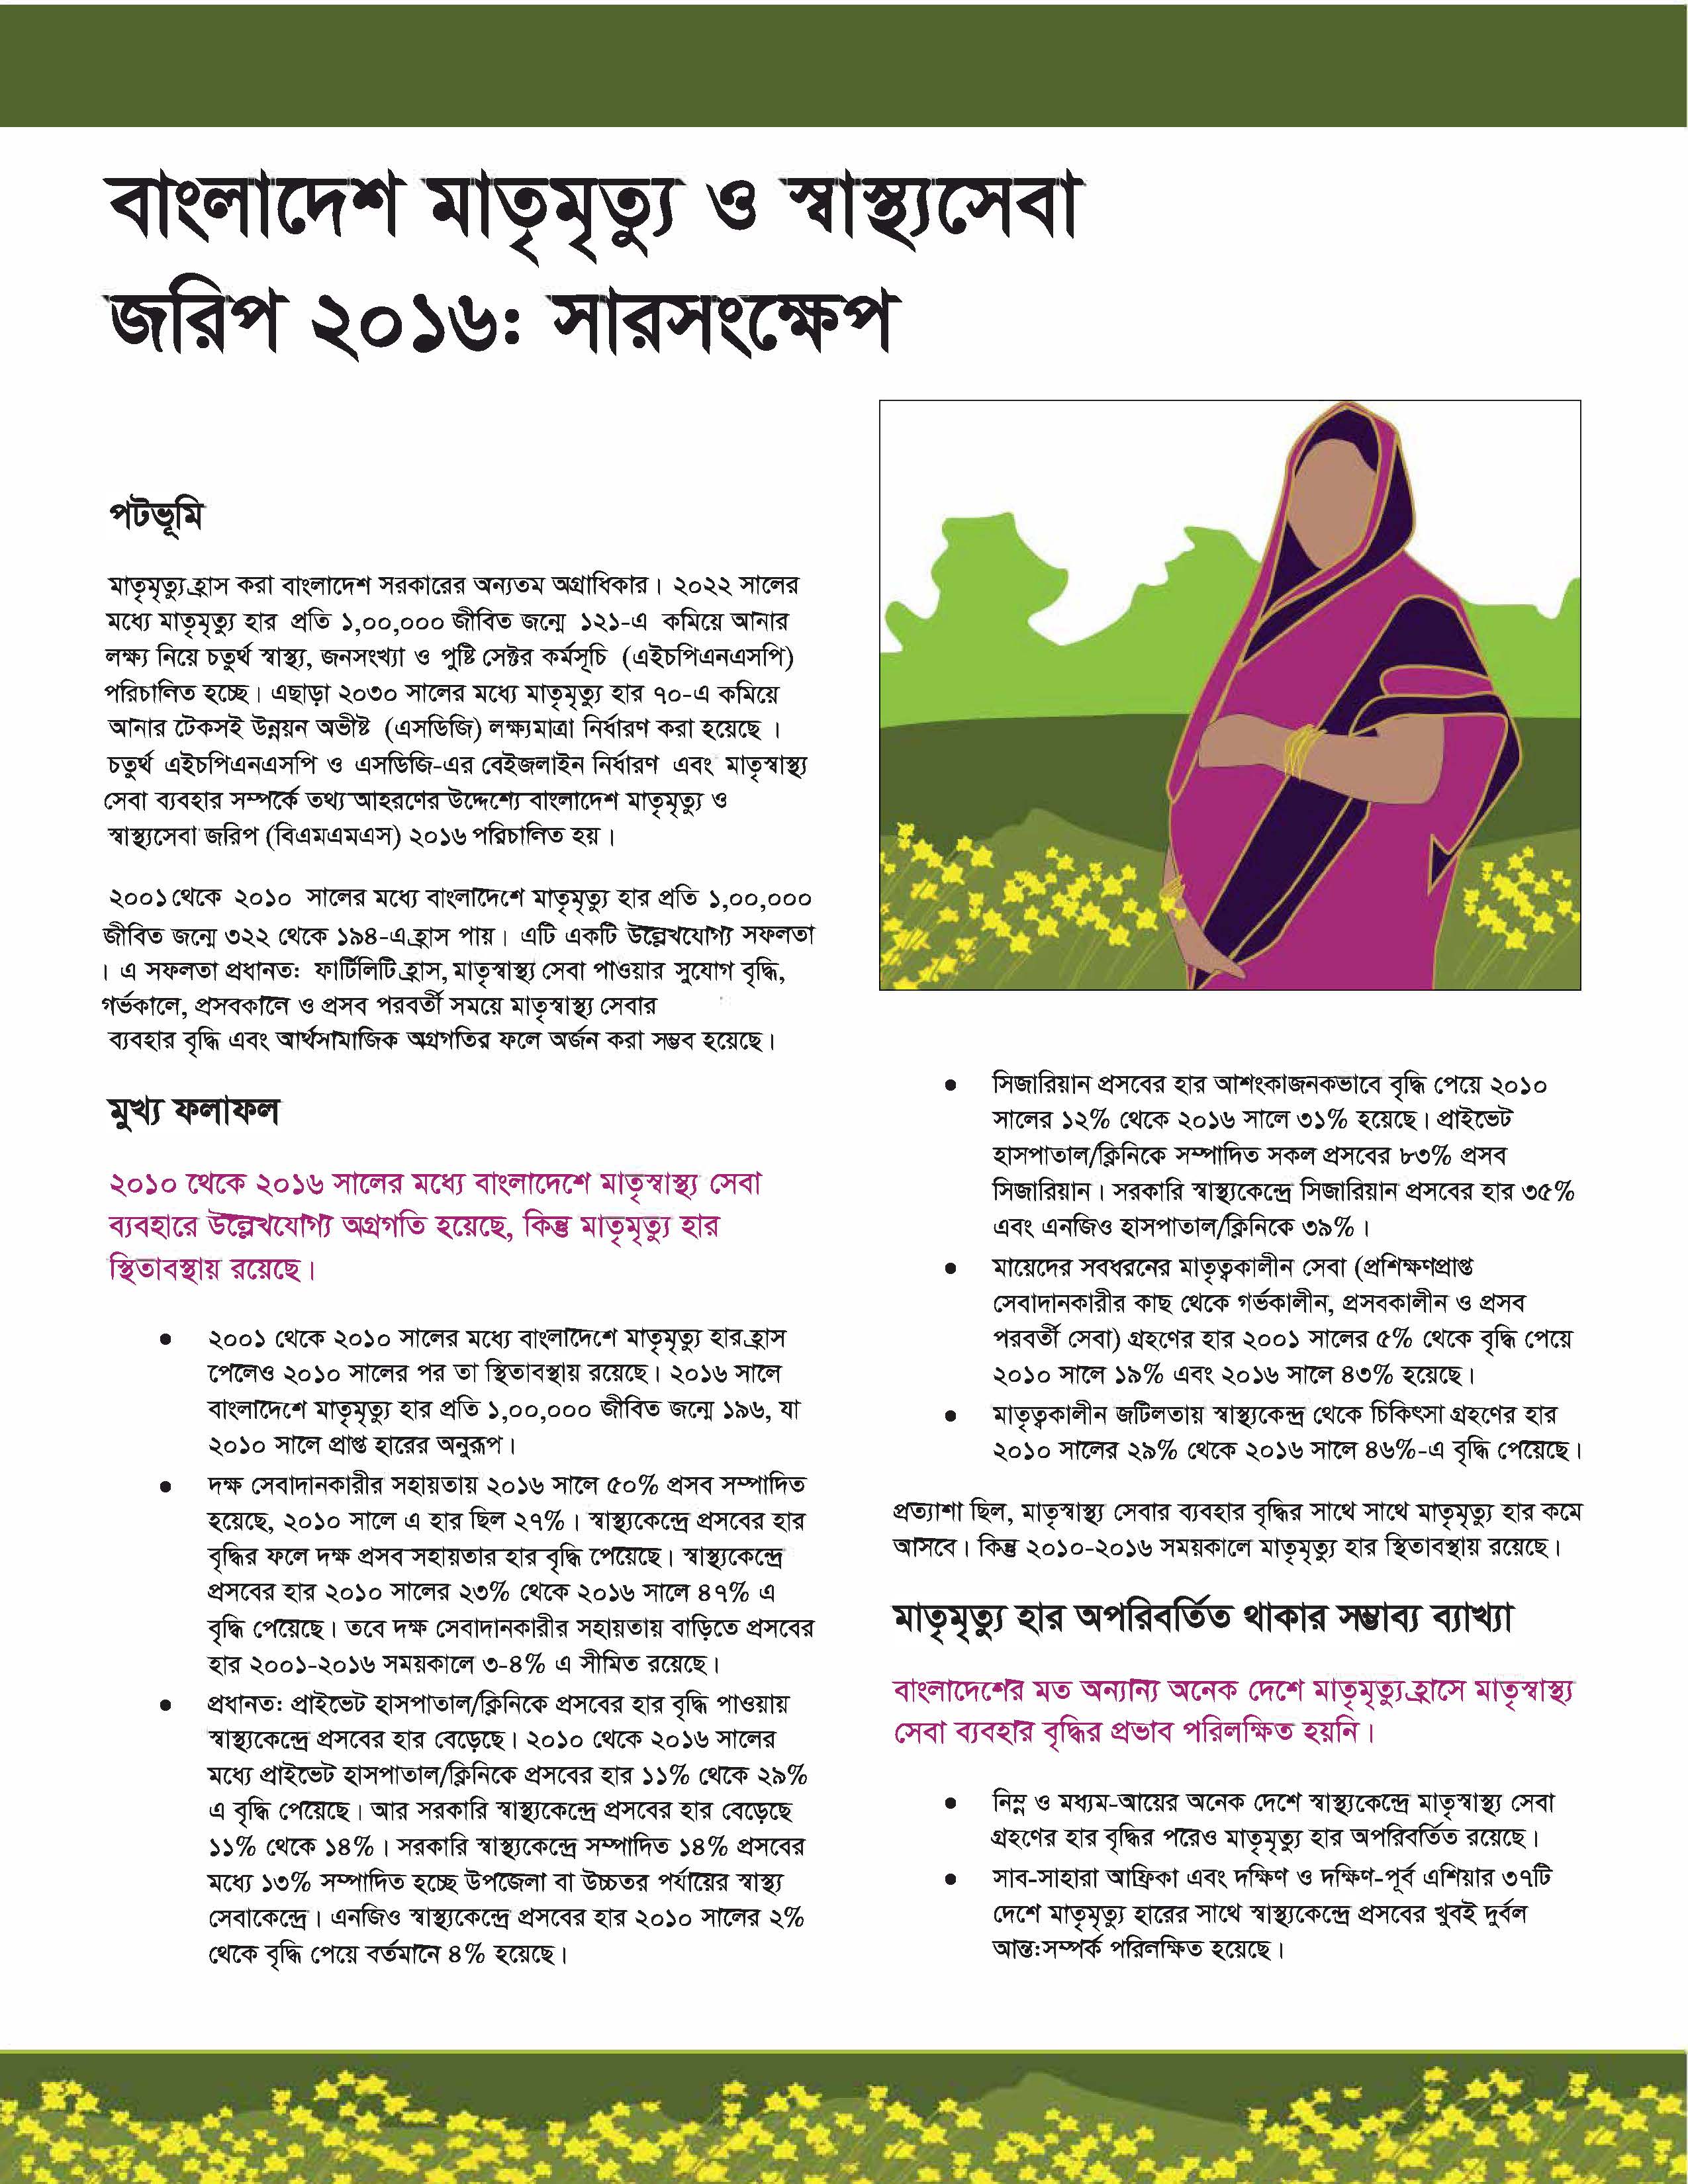 Bangladesh Maternal Mortality and Health Care Survey 2016: Summary (Bengali Version)